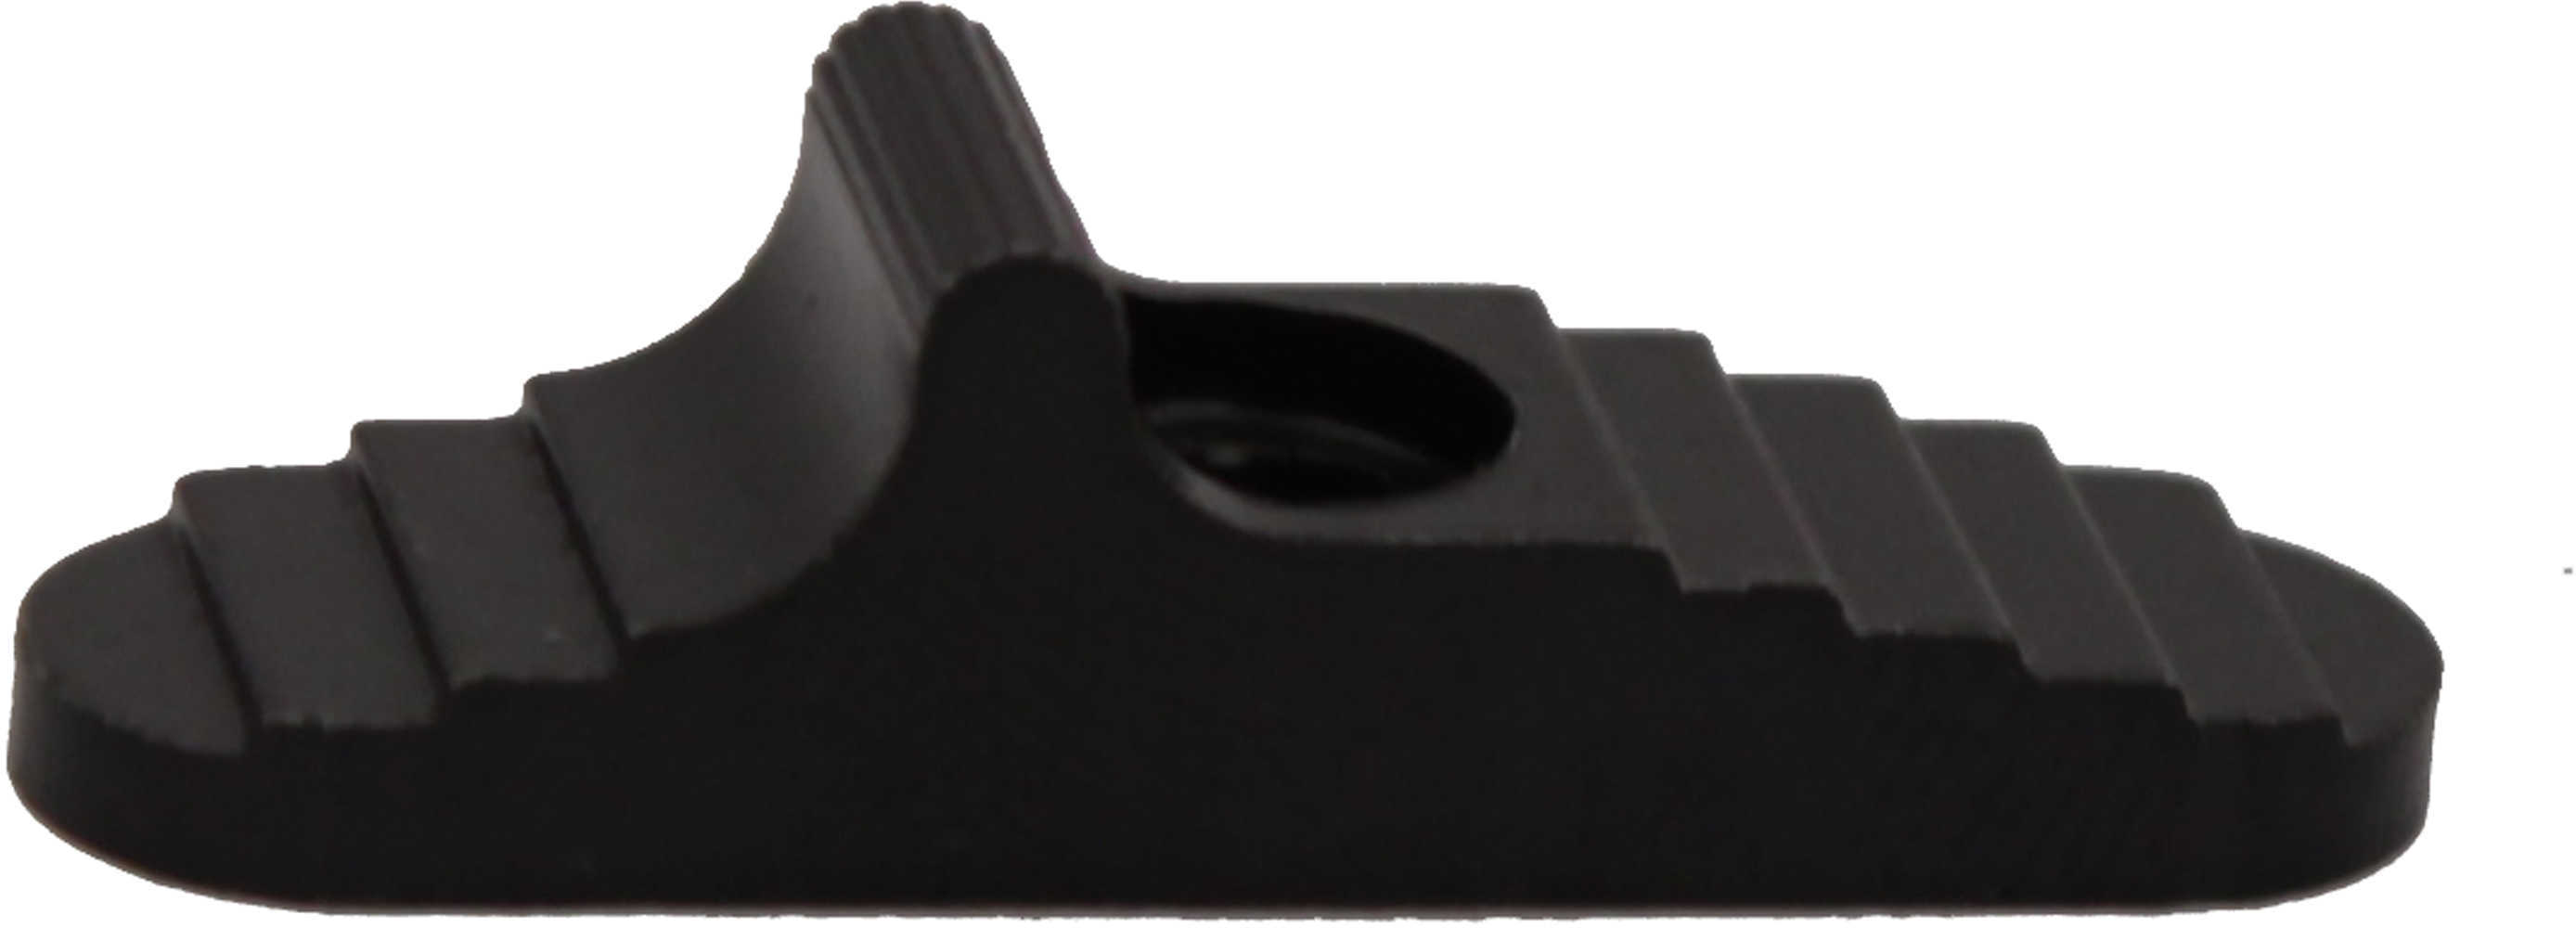 ProMag PM262 Mossberg 500/590 Enhanced Profile Safety Slide 500590 Stainless Steel Black